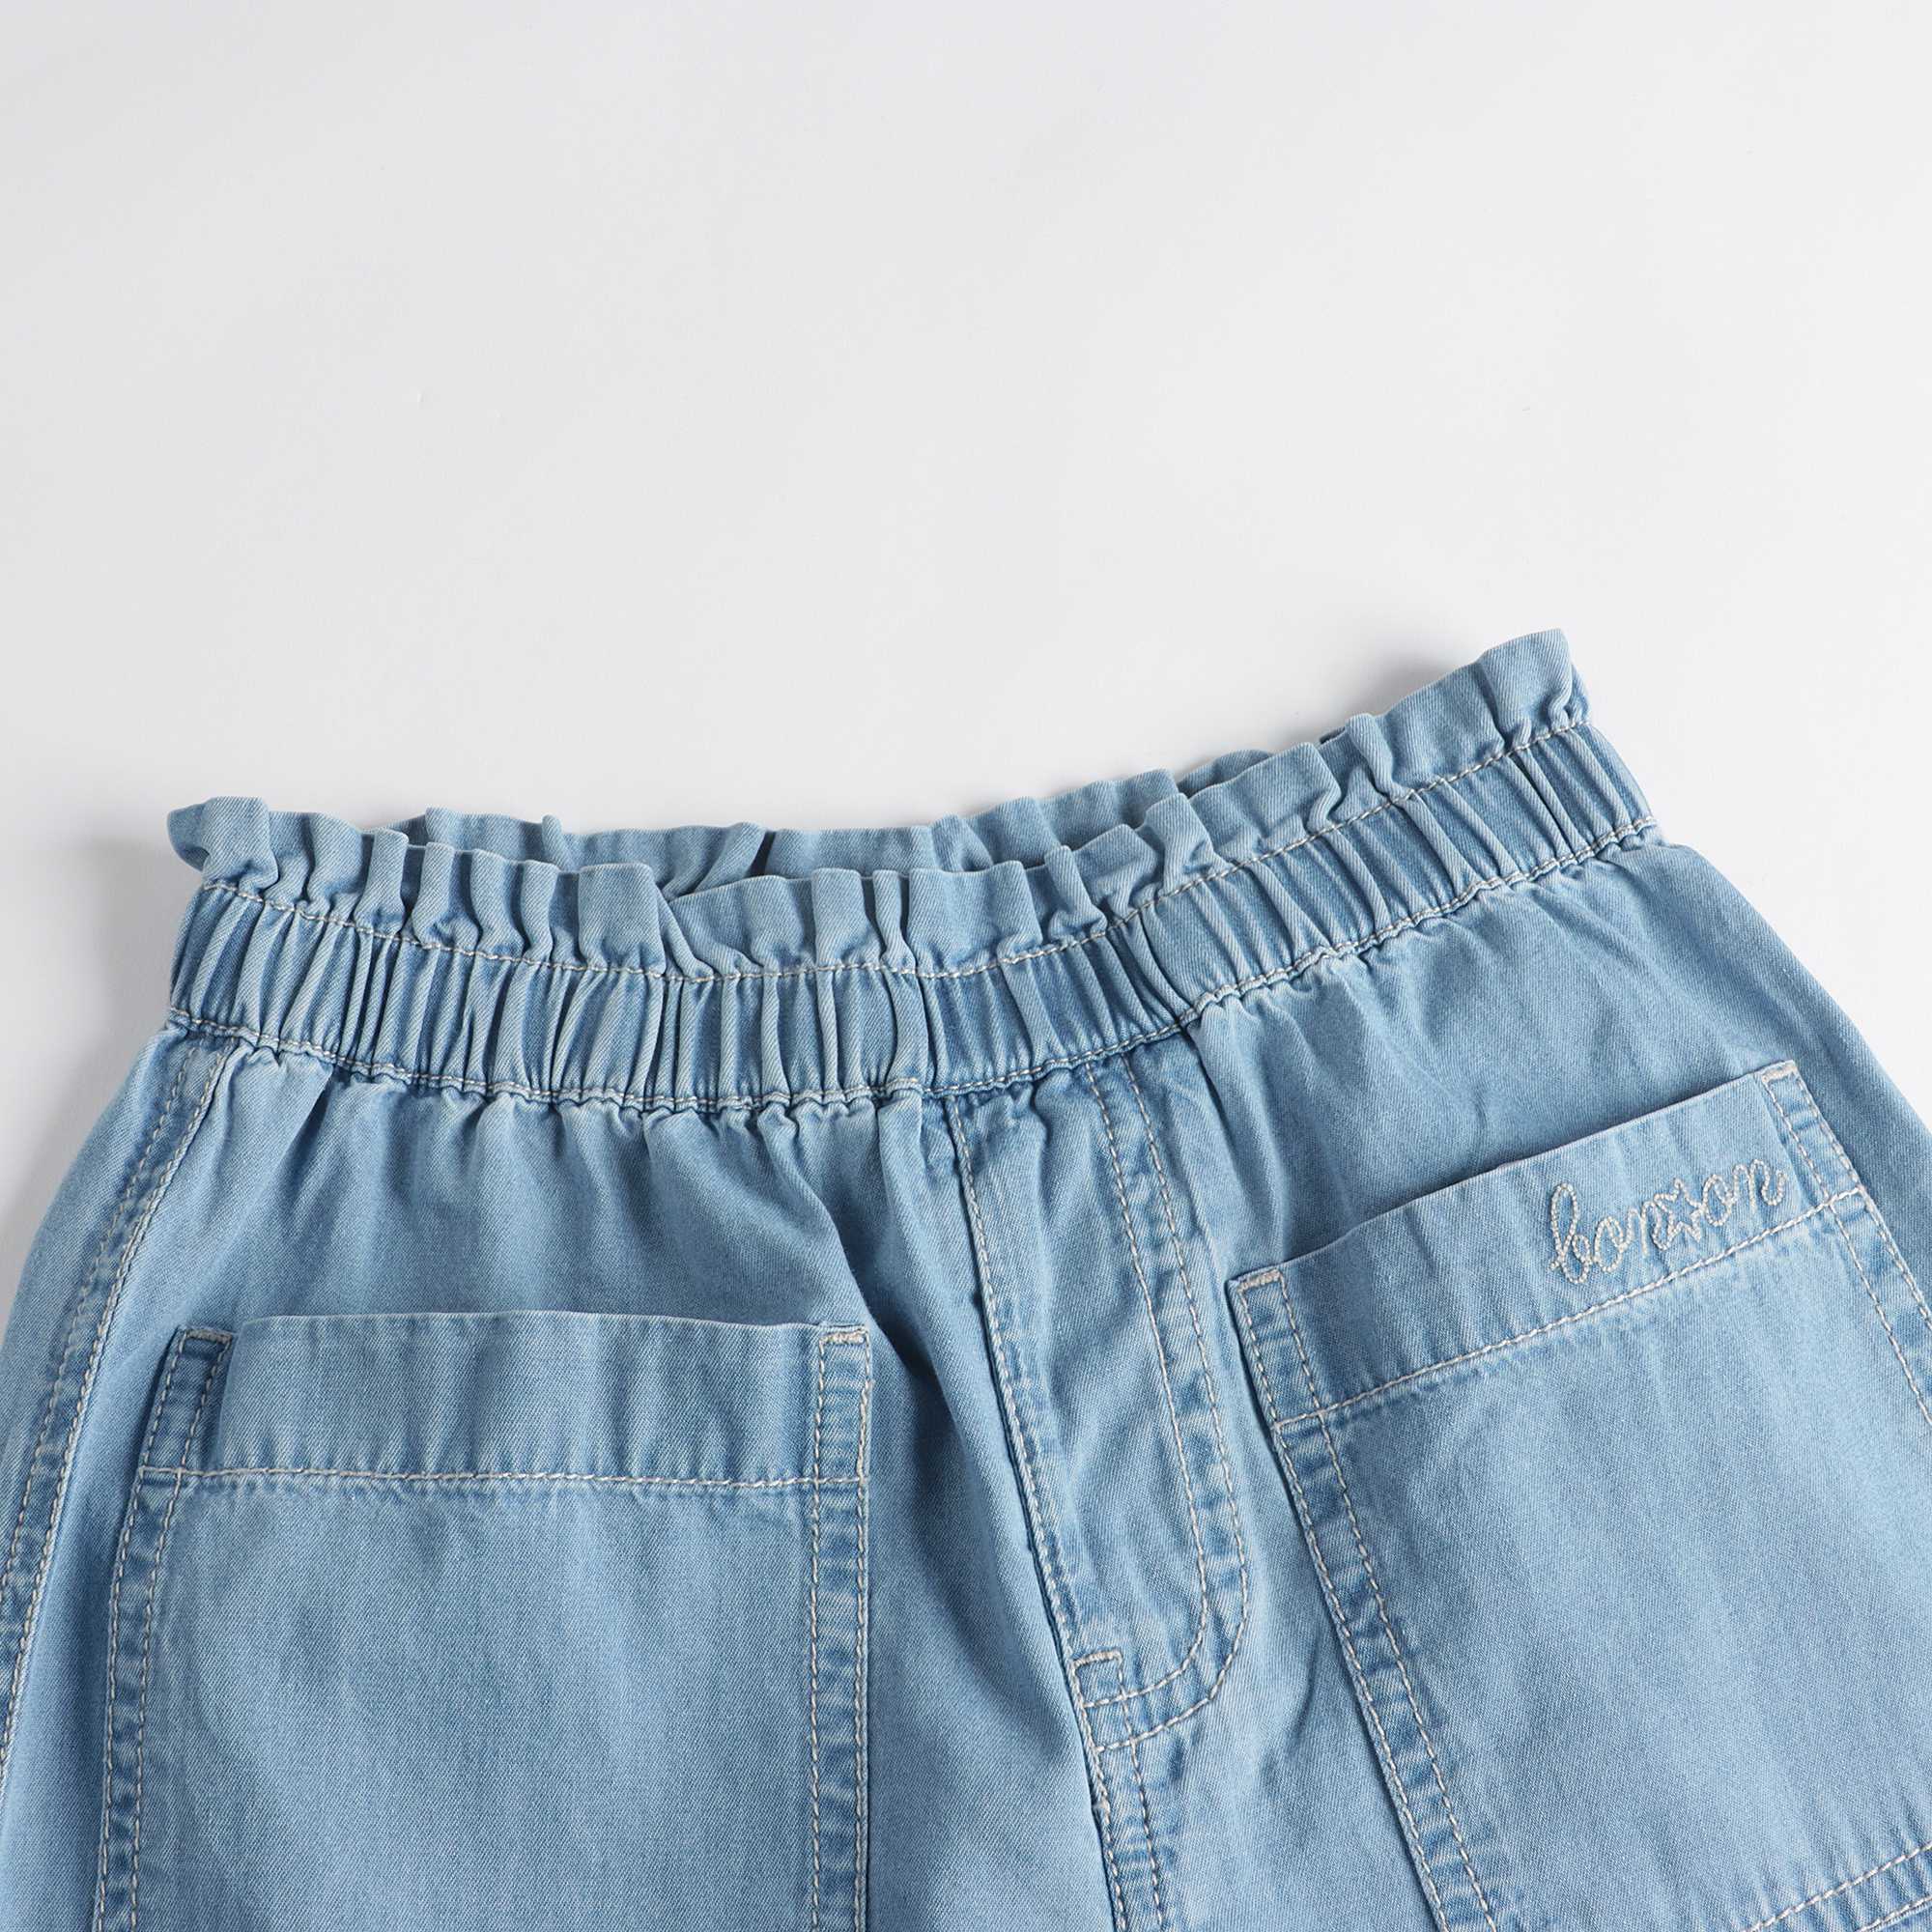 Boys & Girls Blue Denim Trousers